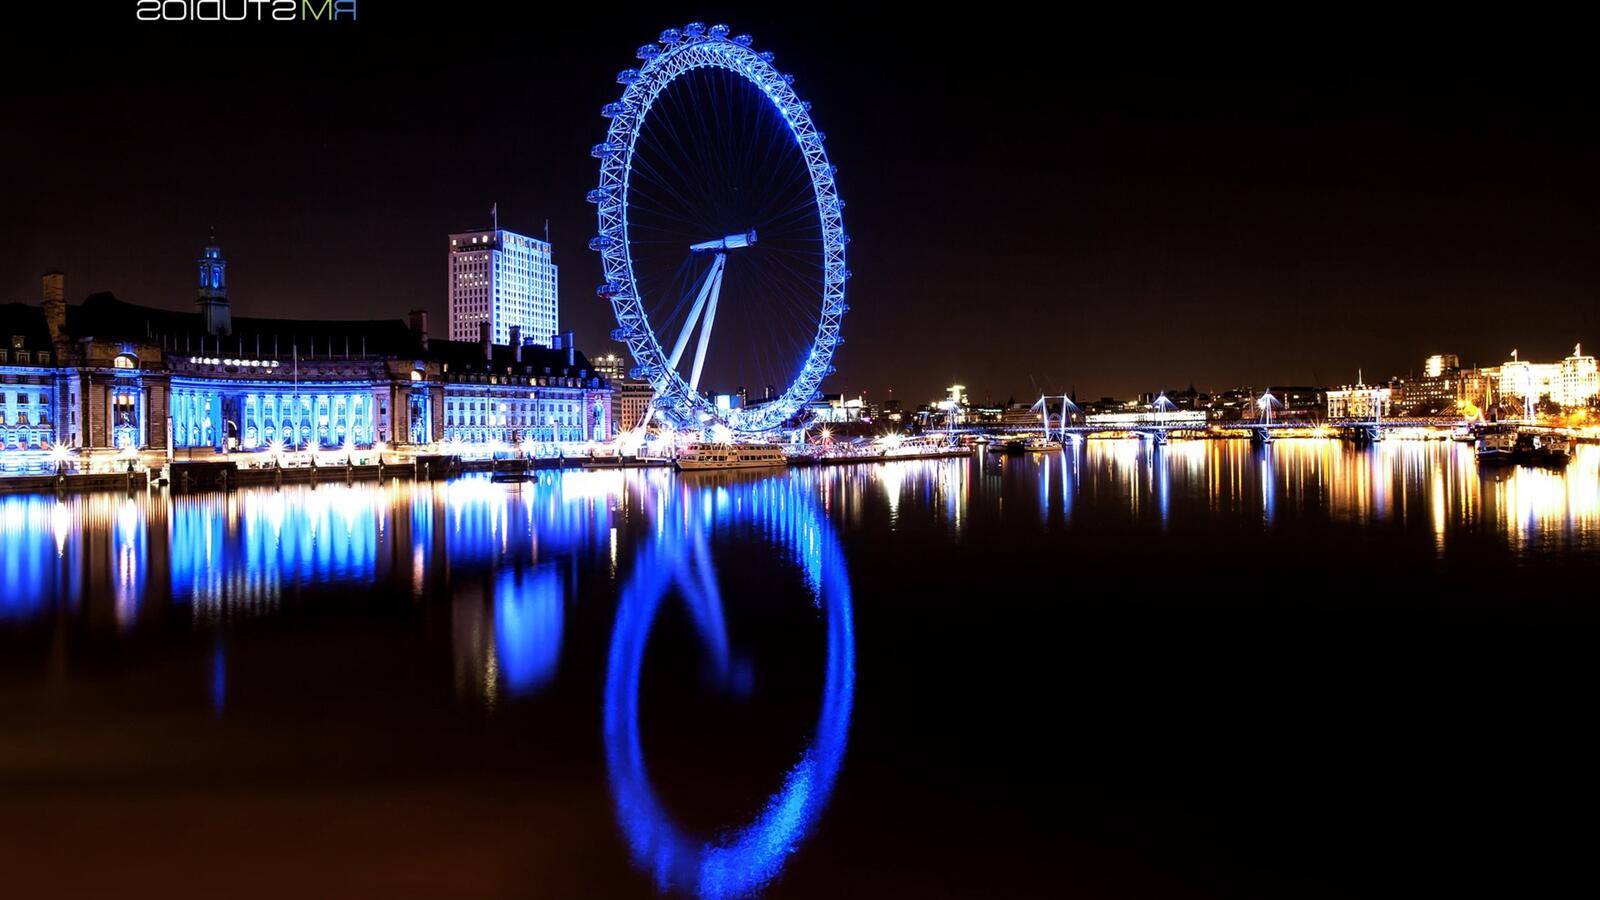 Free photo Ferris wheel with neon blue illumination